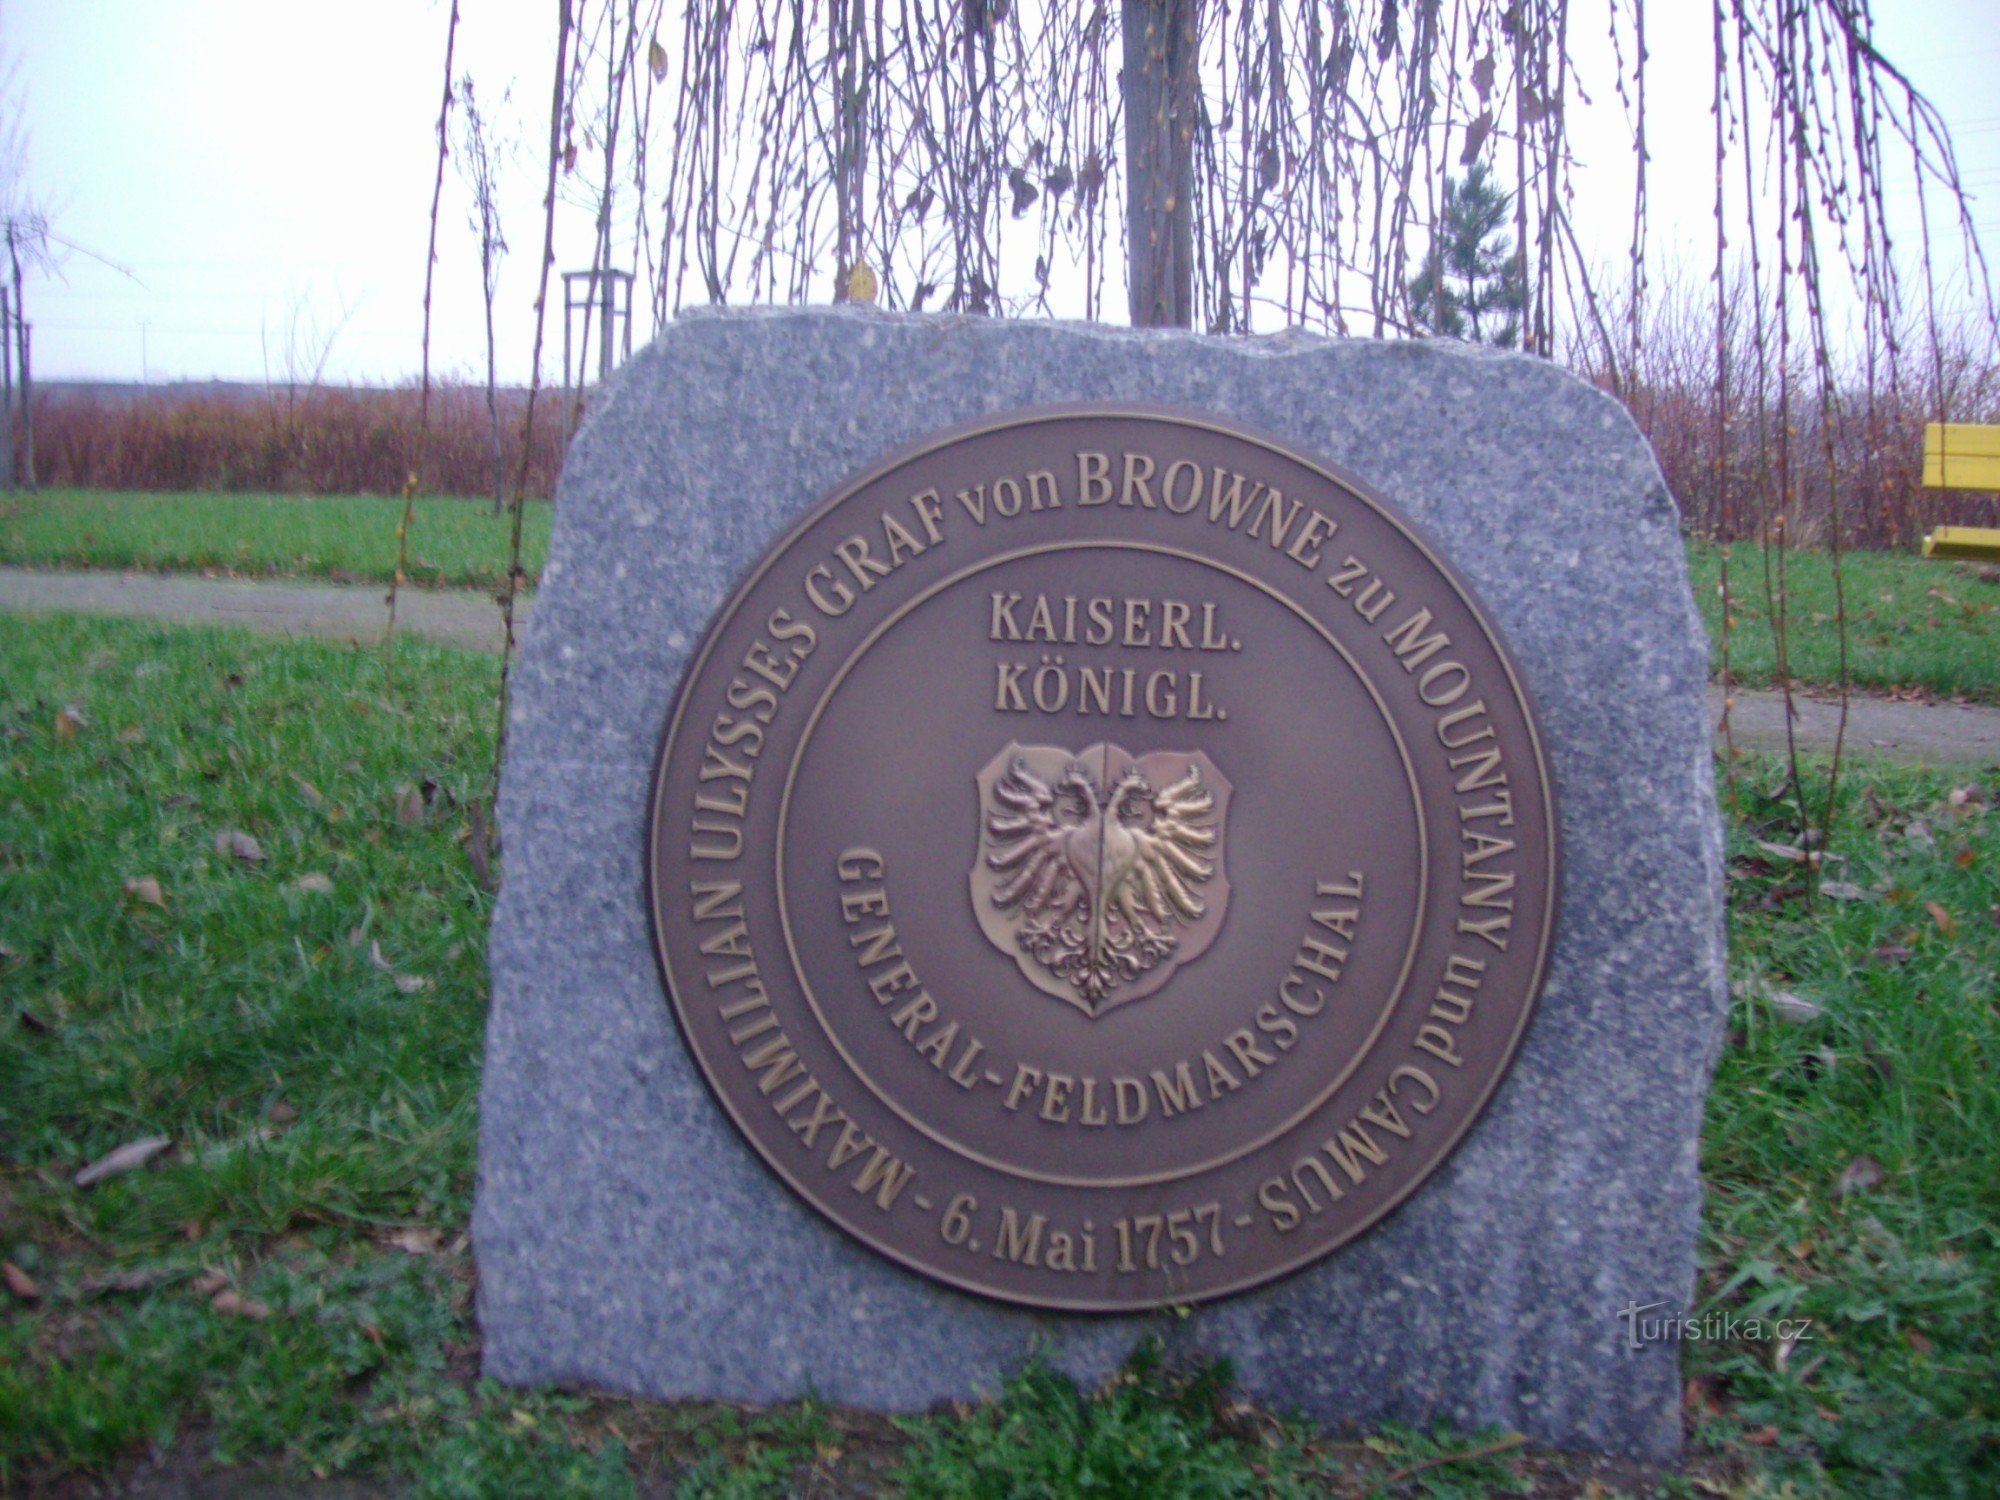 Monumento à Batalha de Štěrbohol